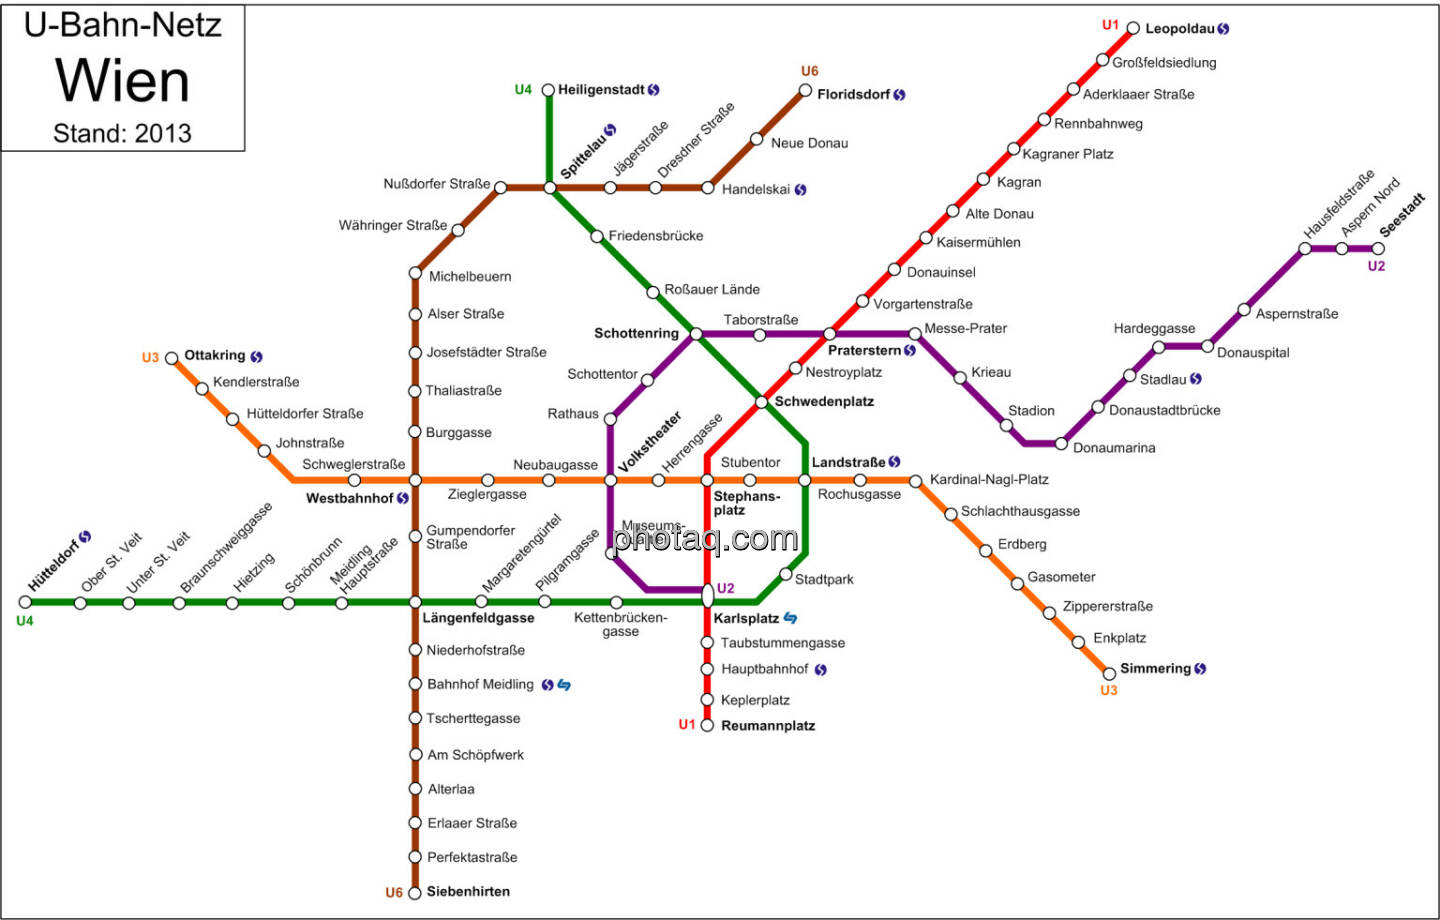 U-Bahn-Netz Wien (Stand 2013)